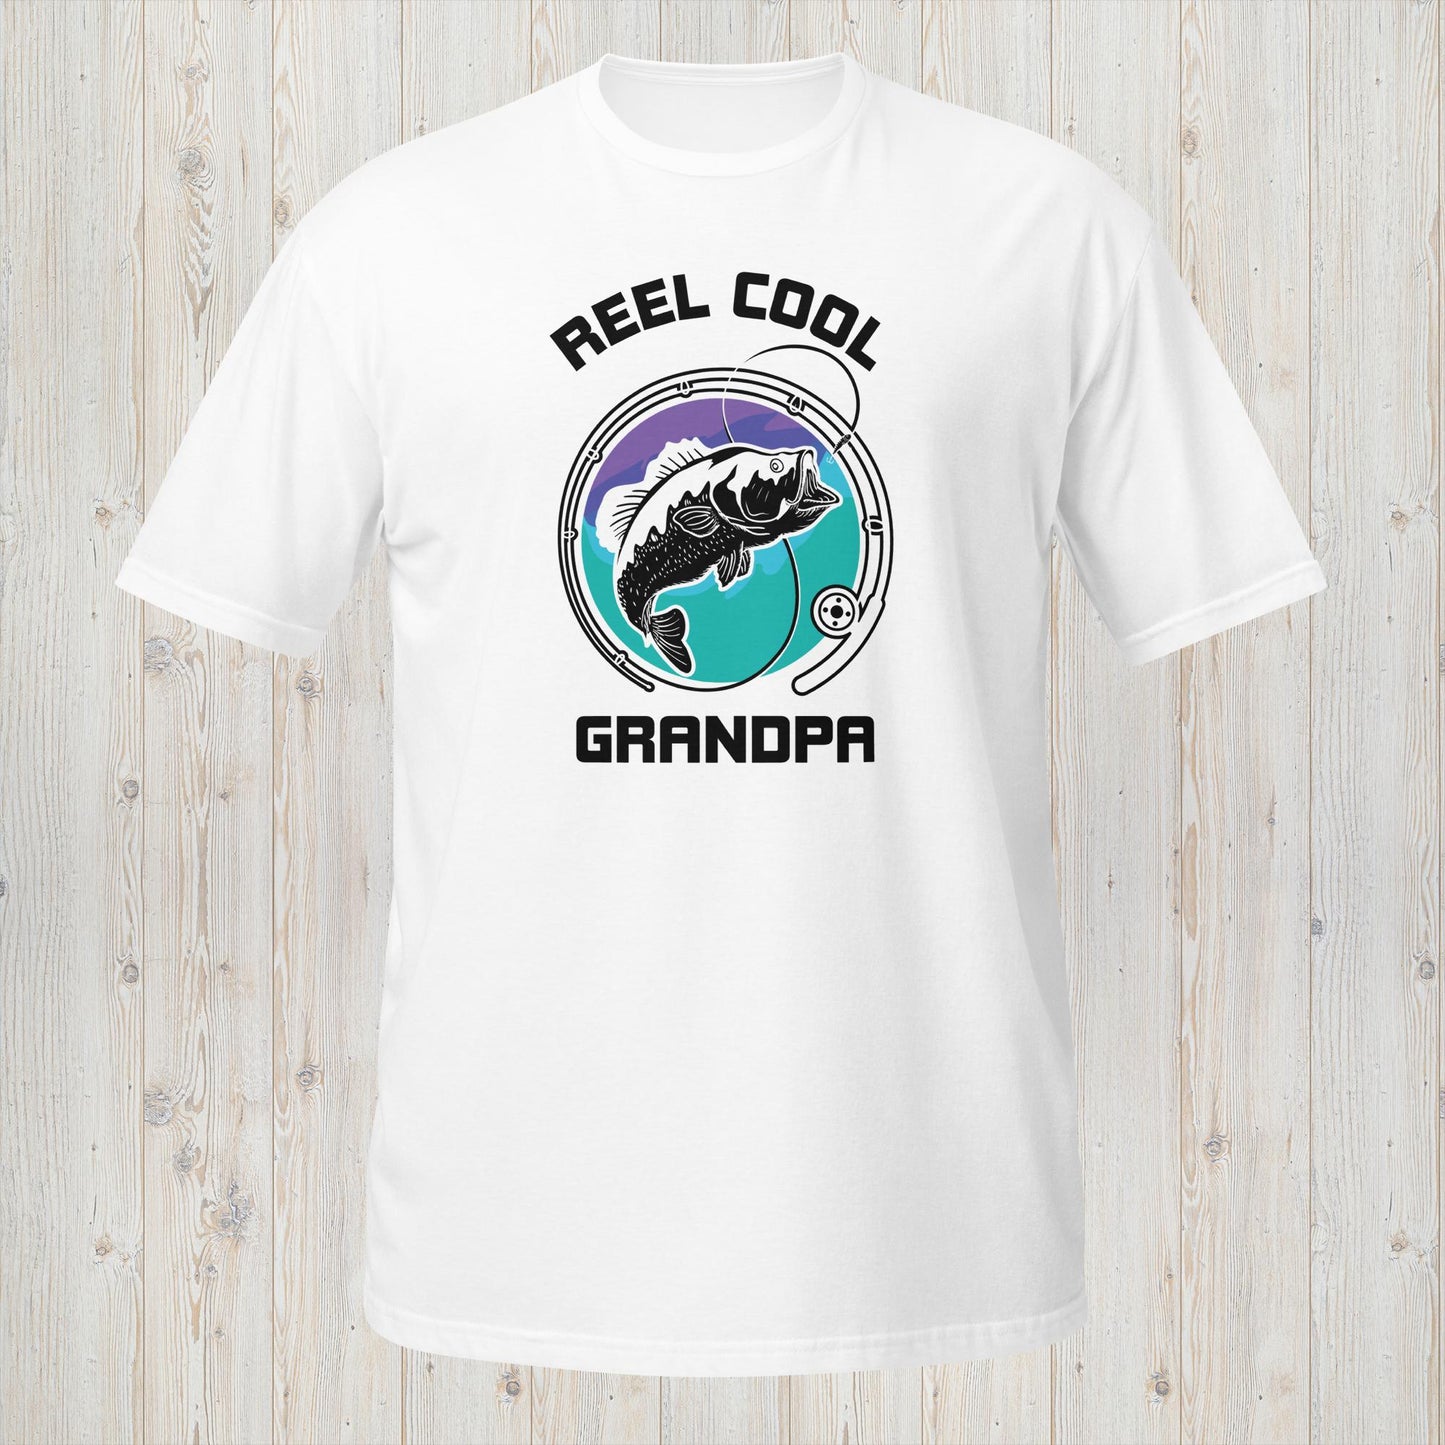 Reel Cool Grandpa Tee - A Fishing-Inspired Grandfather Shirt